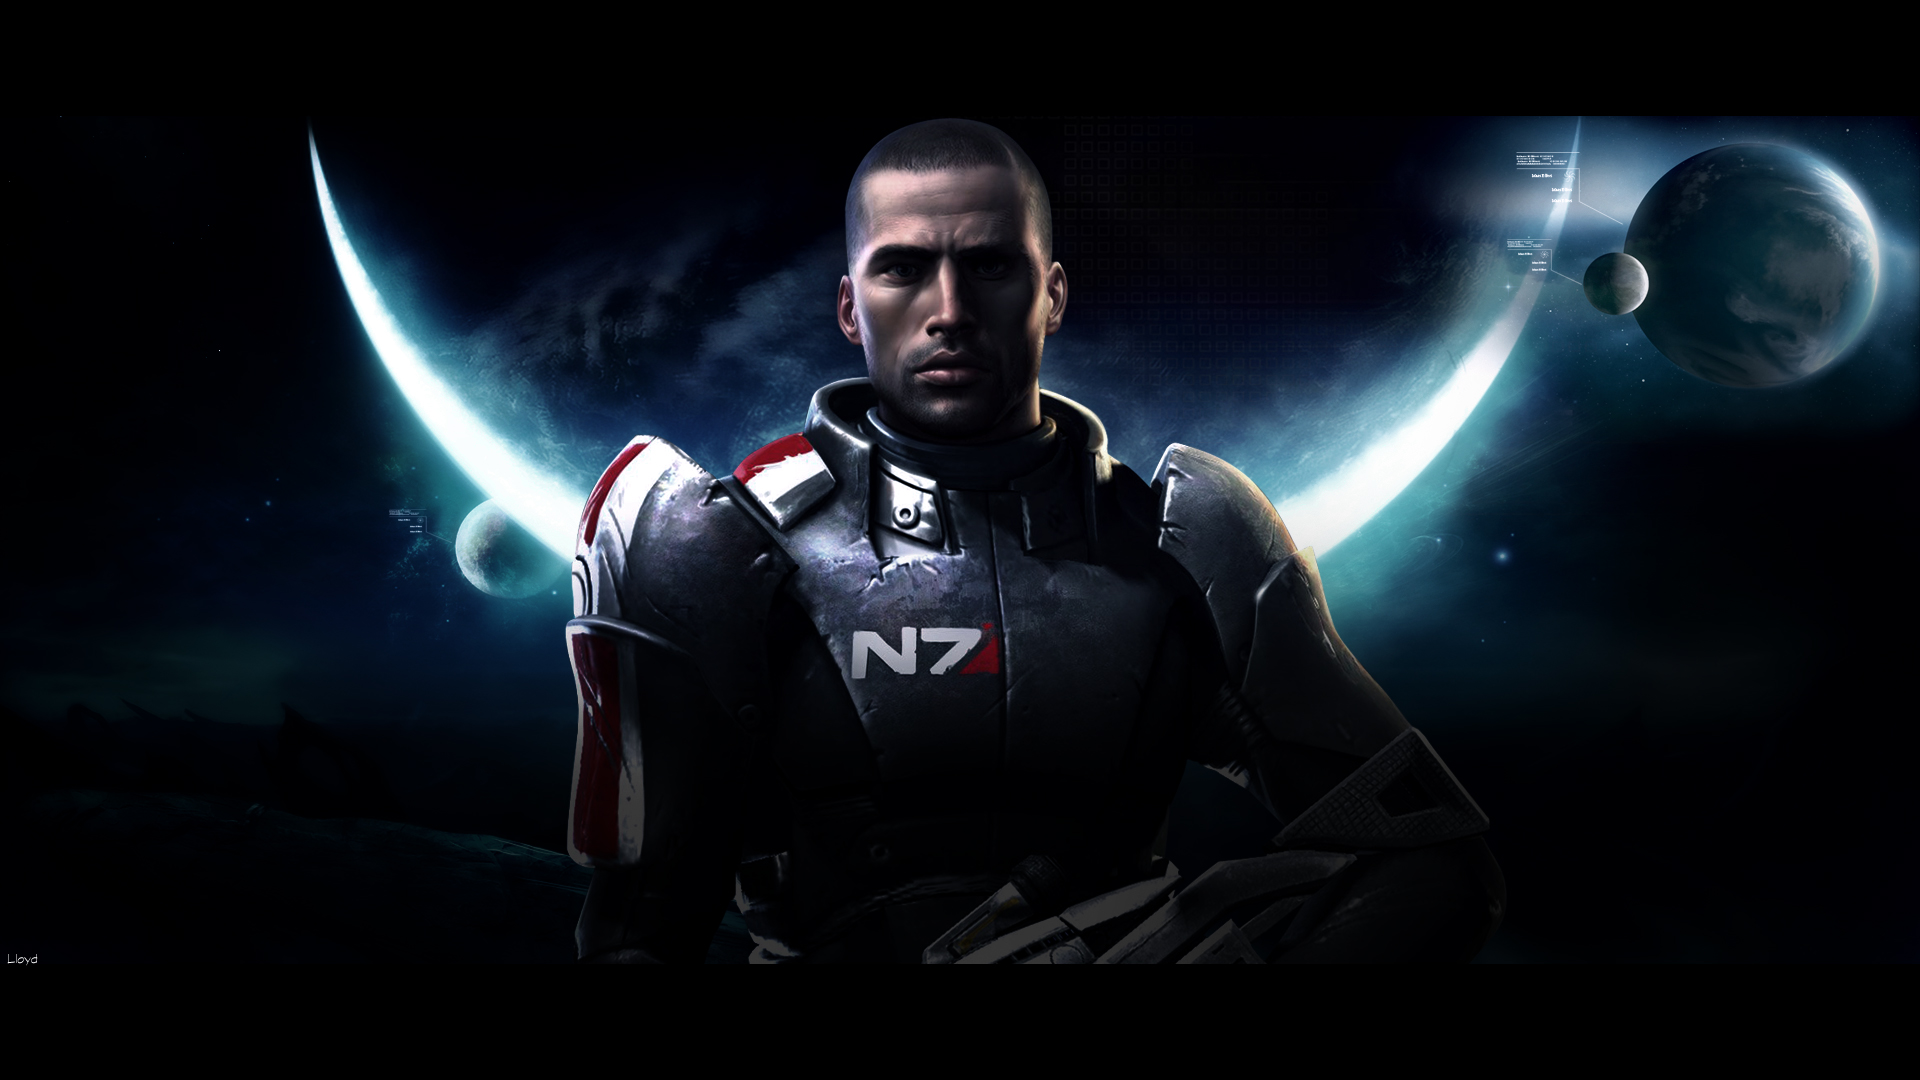 Mass_Effect_2_Wallpaper_2_by_igotgame1075.jpg